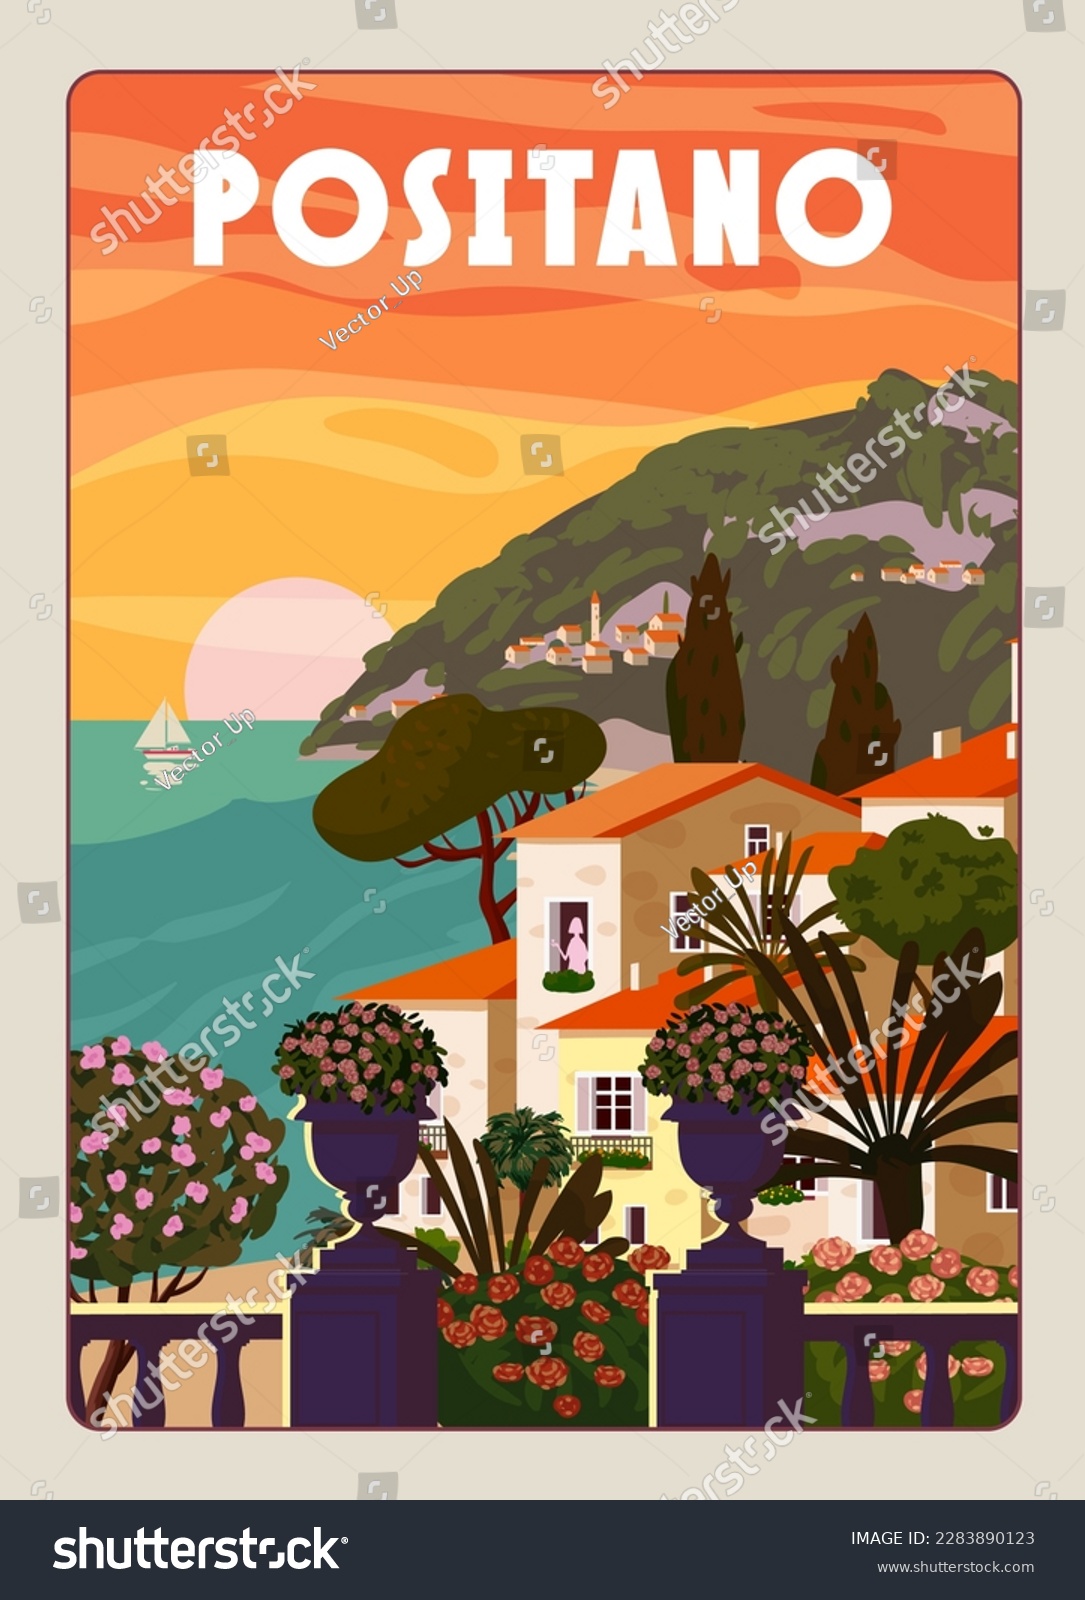 SVG of Positano Coast Italy, mediterranean romantic landscape, mountains, seaside town, sea. Retro poster travel svg